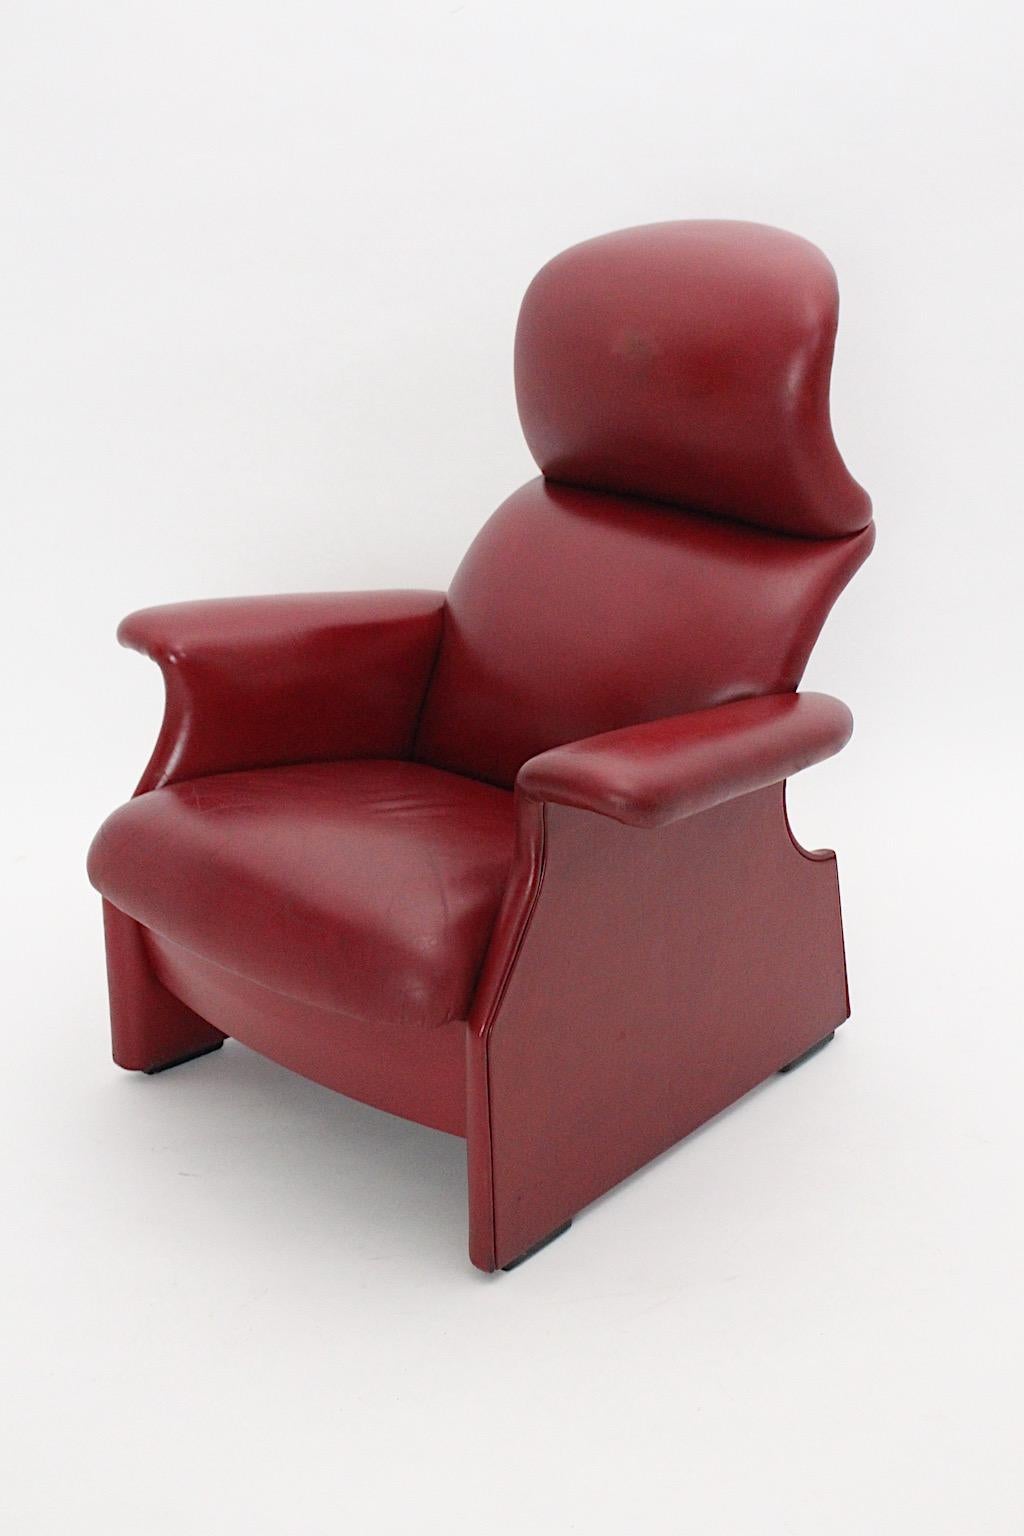 Organic Vintage Sculptural Red Lounge Chair by Achille & Piero Castiglioni 1960s For Sale 4